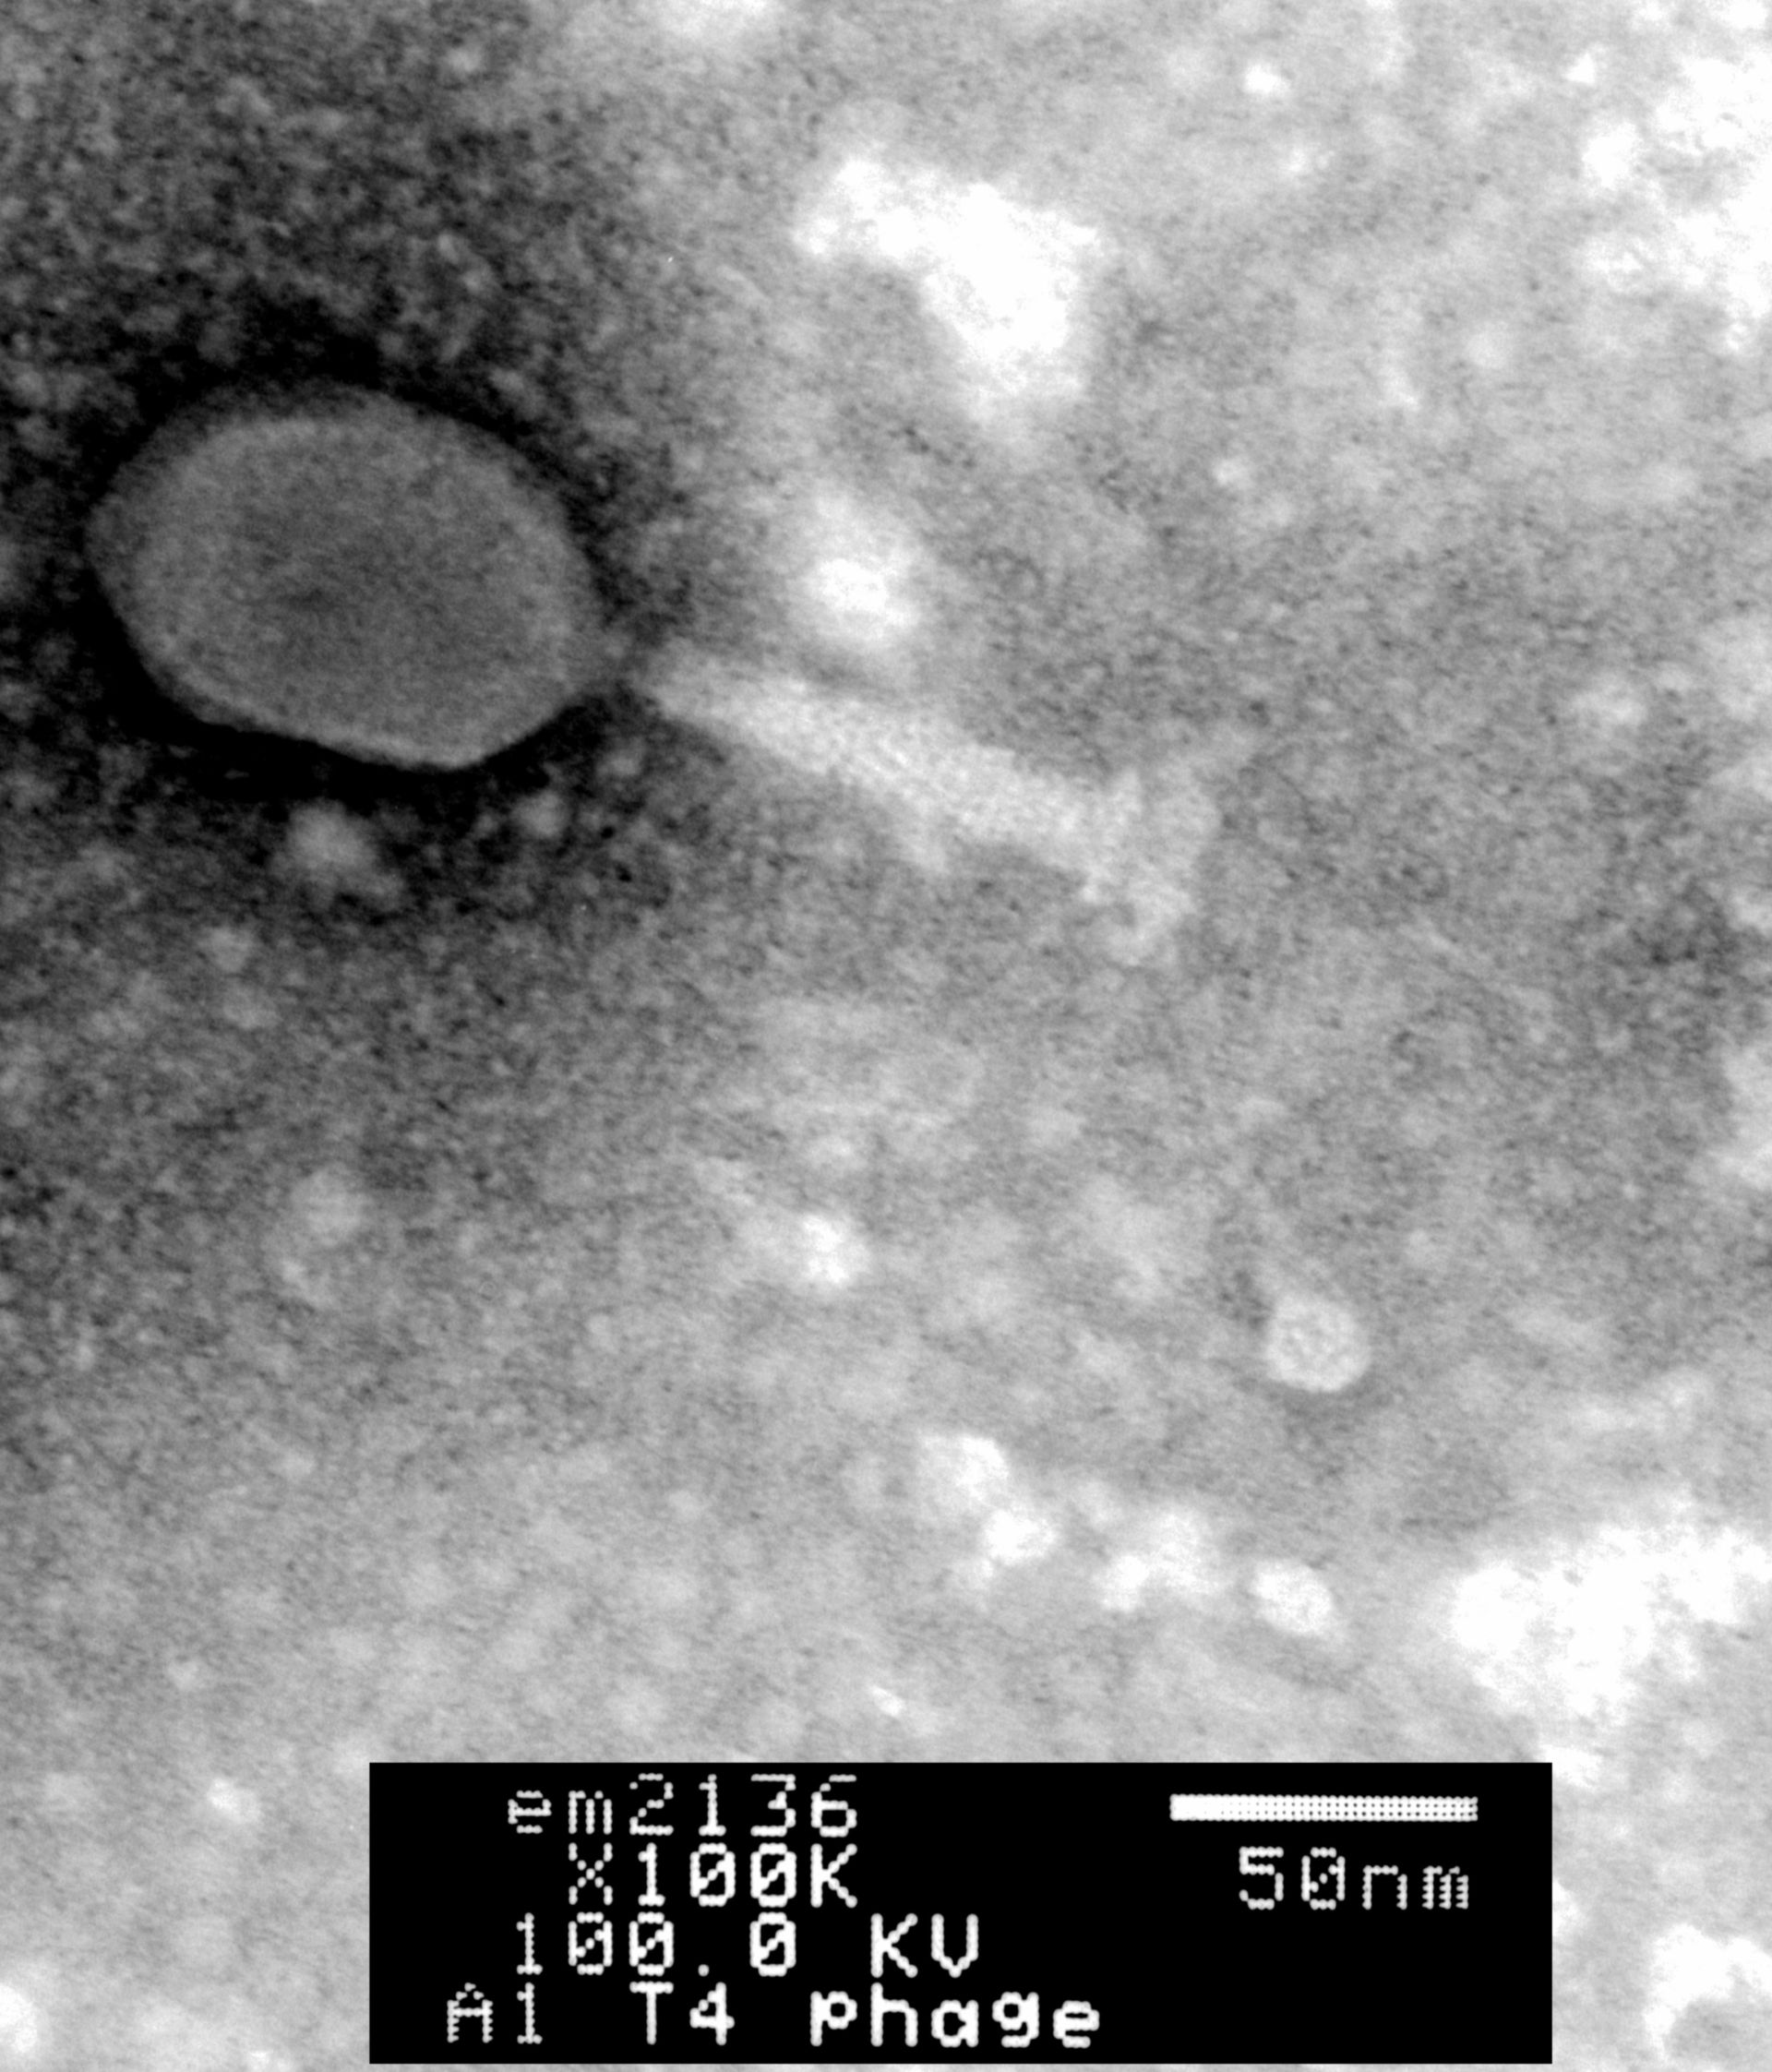 Enterobacteria phage T4 (Phage tail fibers) - CIL:41129